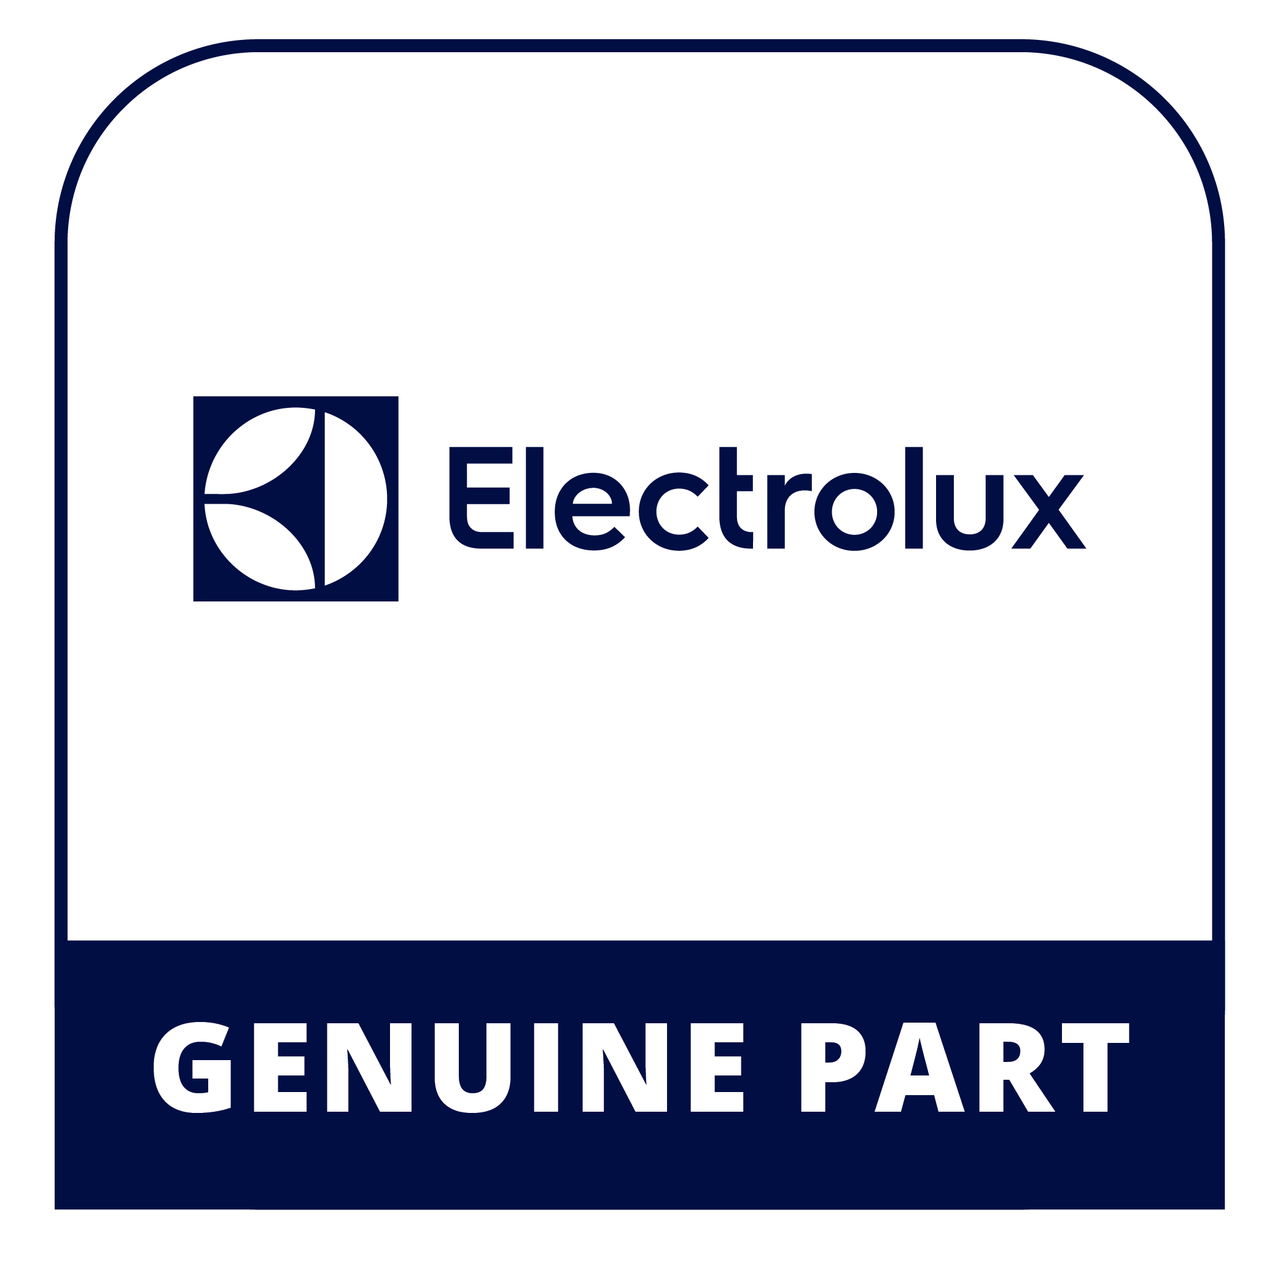 Frigidaire - Electrolux 134885100 Button - Genuine Electrolux Part